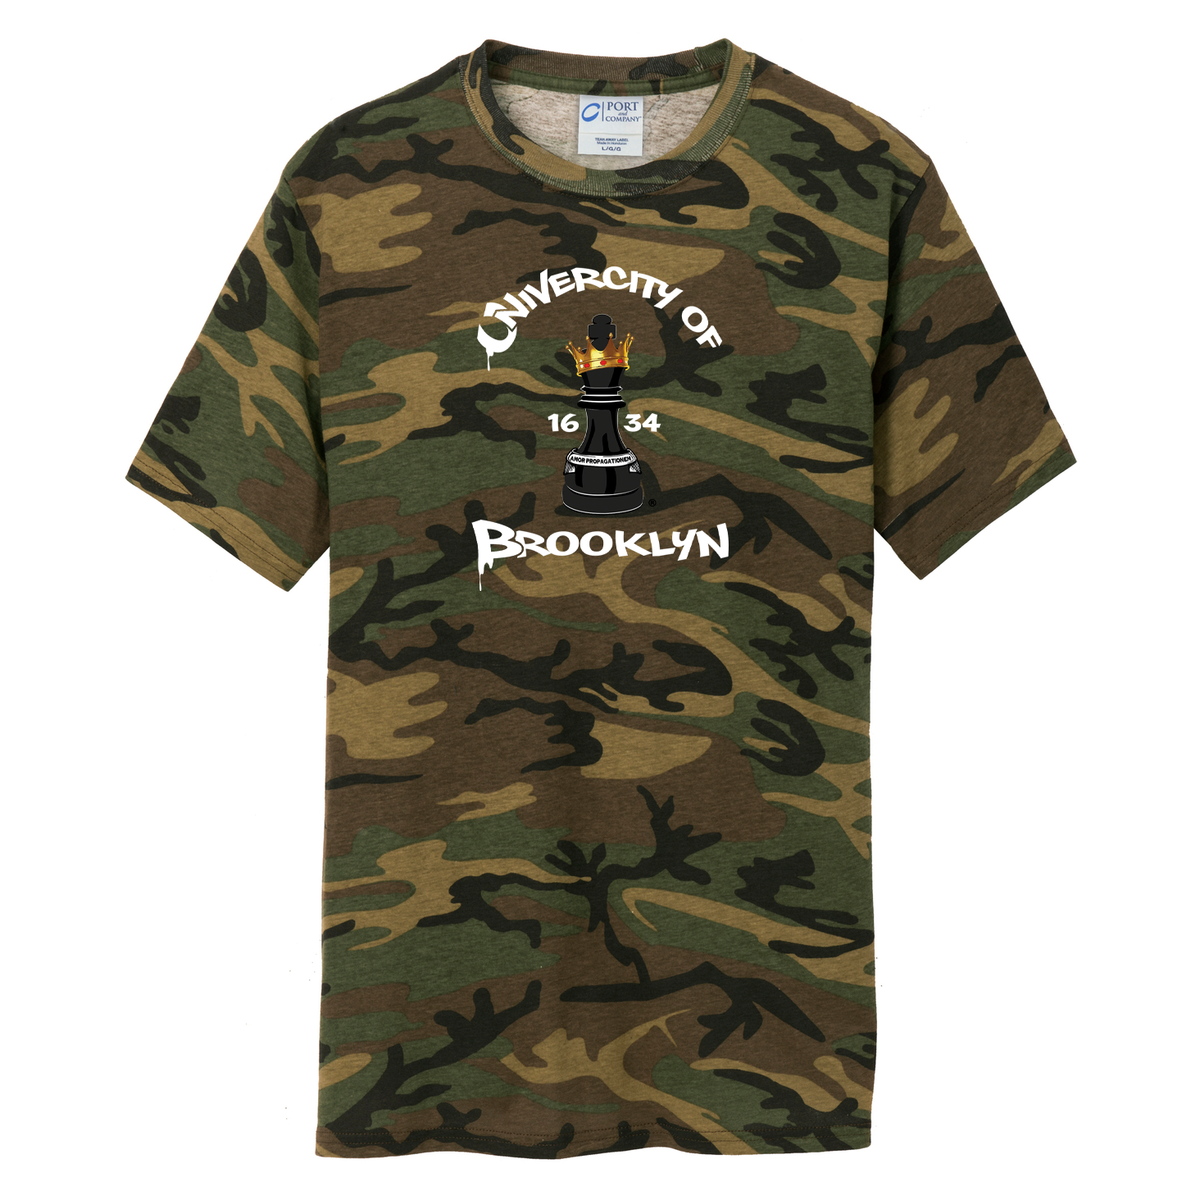 UniverCity of Brooklyn Camo T-Shirt